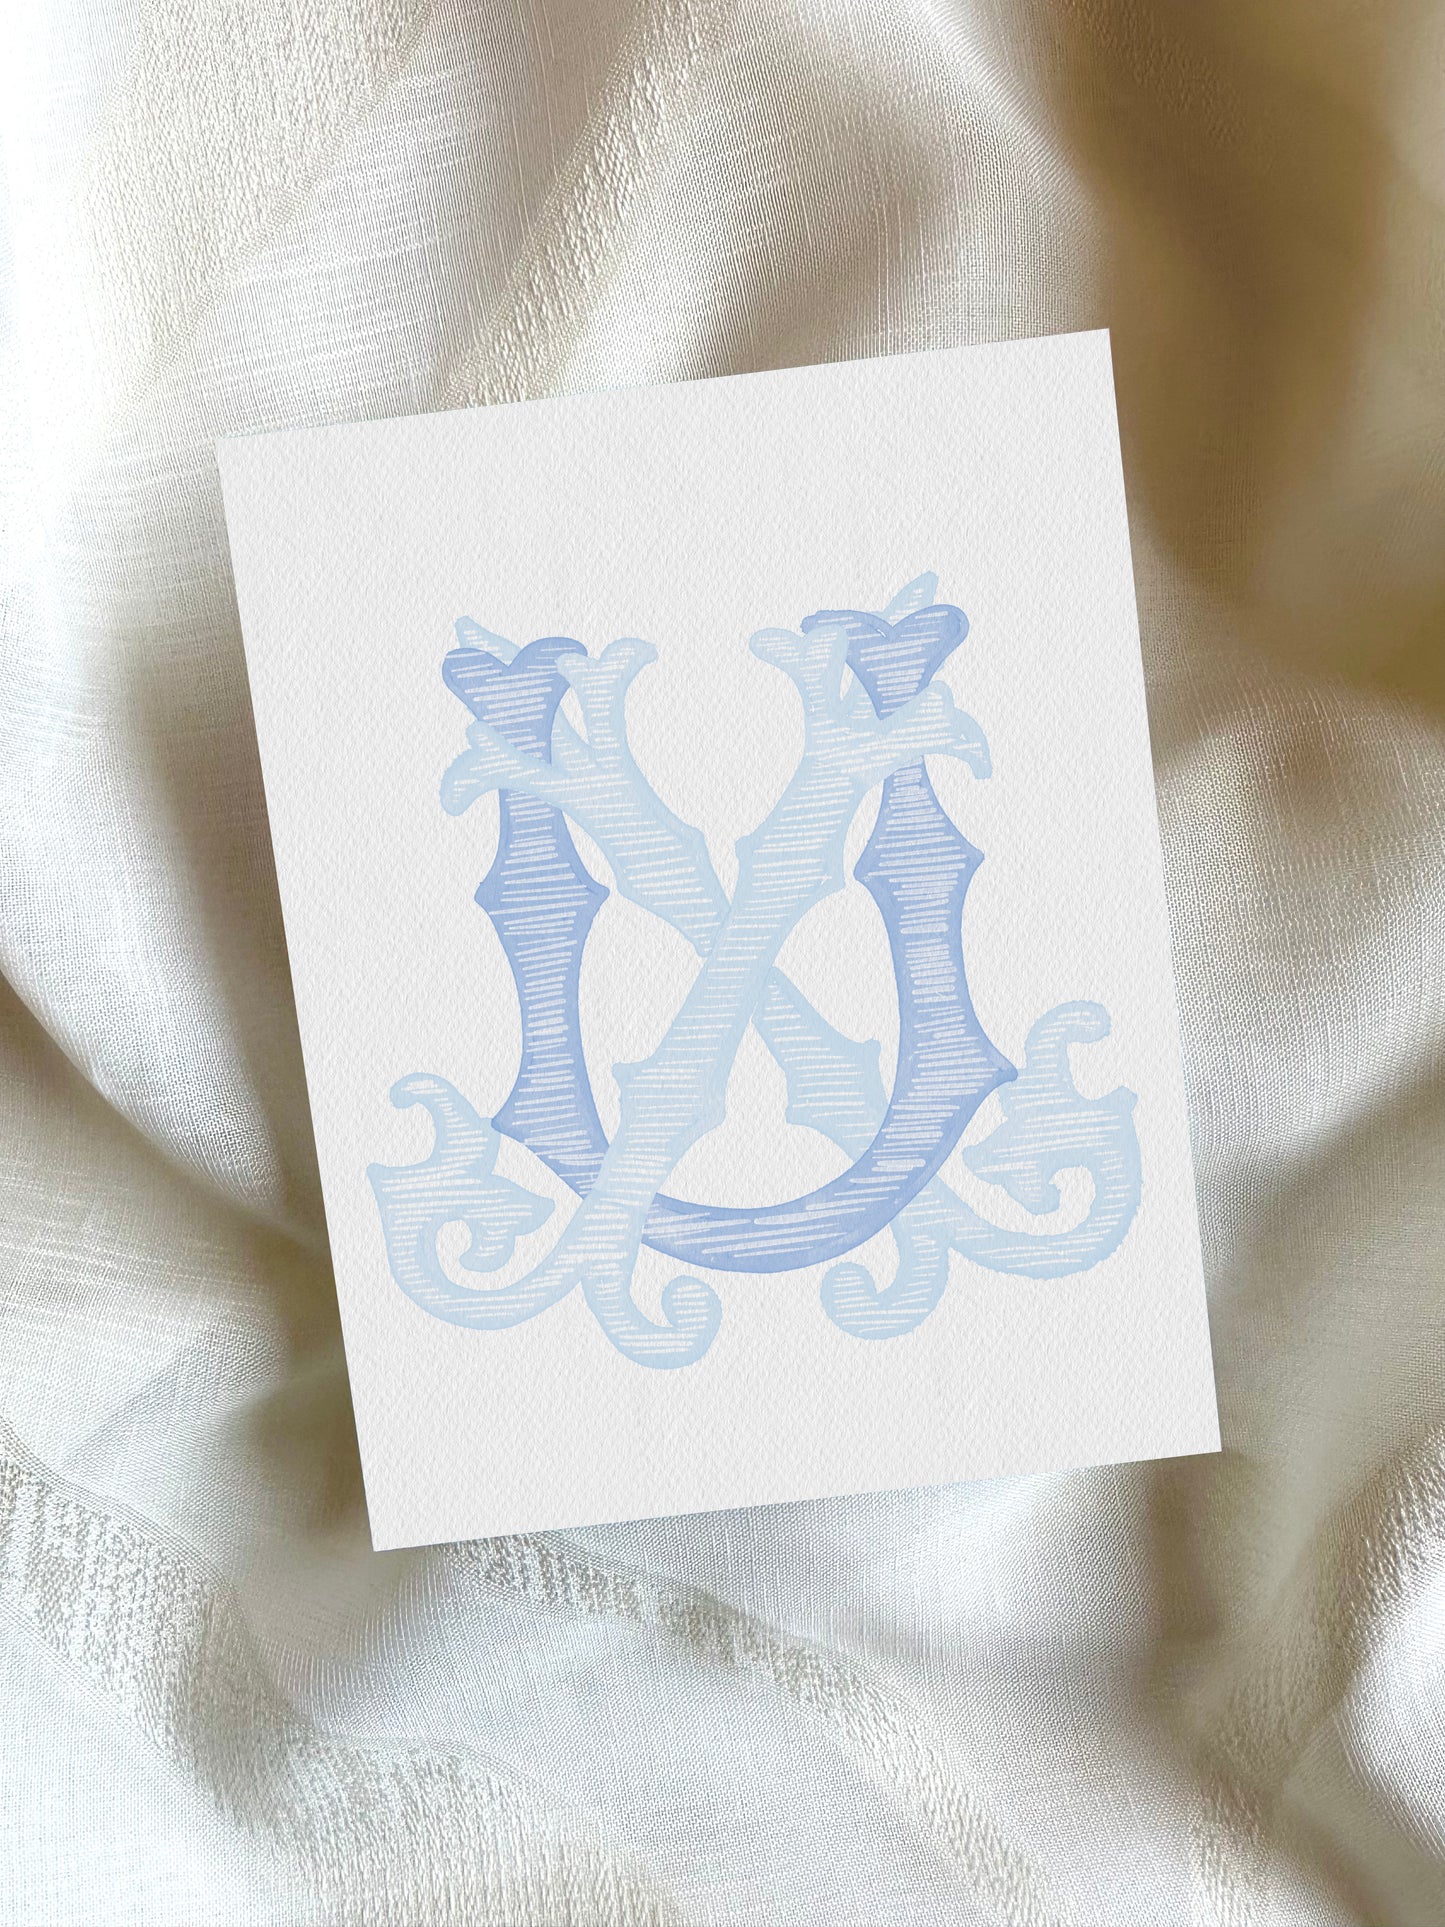 2 Letter Monogram with Letters UX XU | Digital Download - Wedding Monogram SVG, Personal Logo, Wedding Logo for Wedding Invitations The Wedding Crest Lab